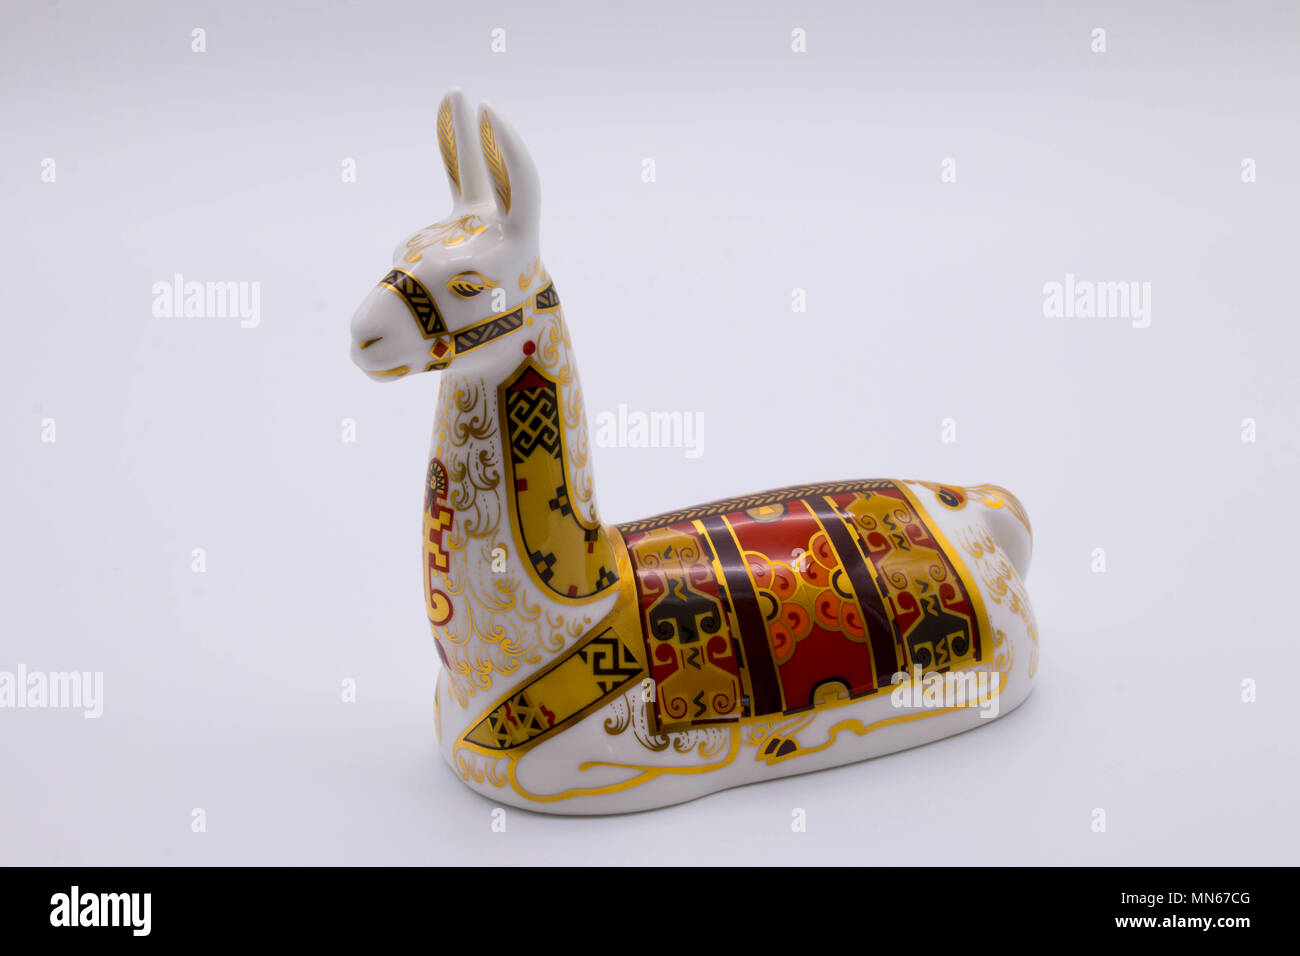 Royal Crown Derby bone china paperweight of a lama uk Stock Photo